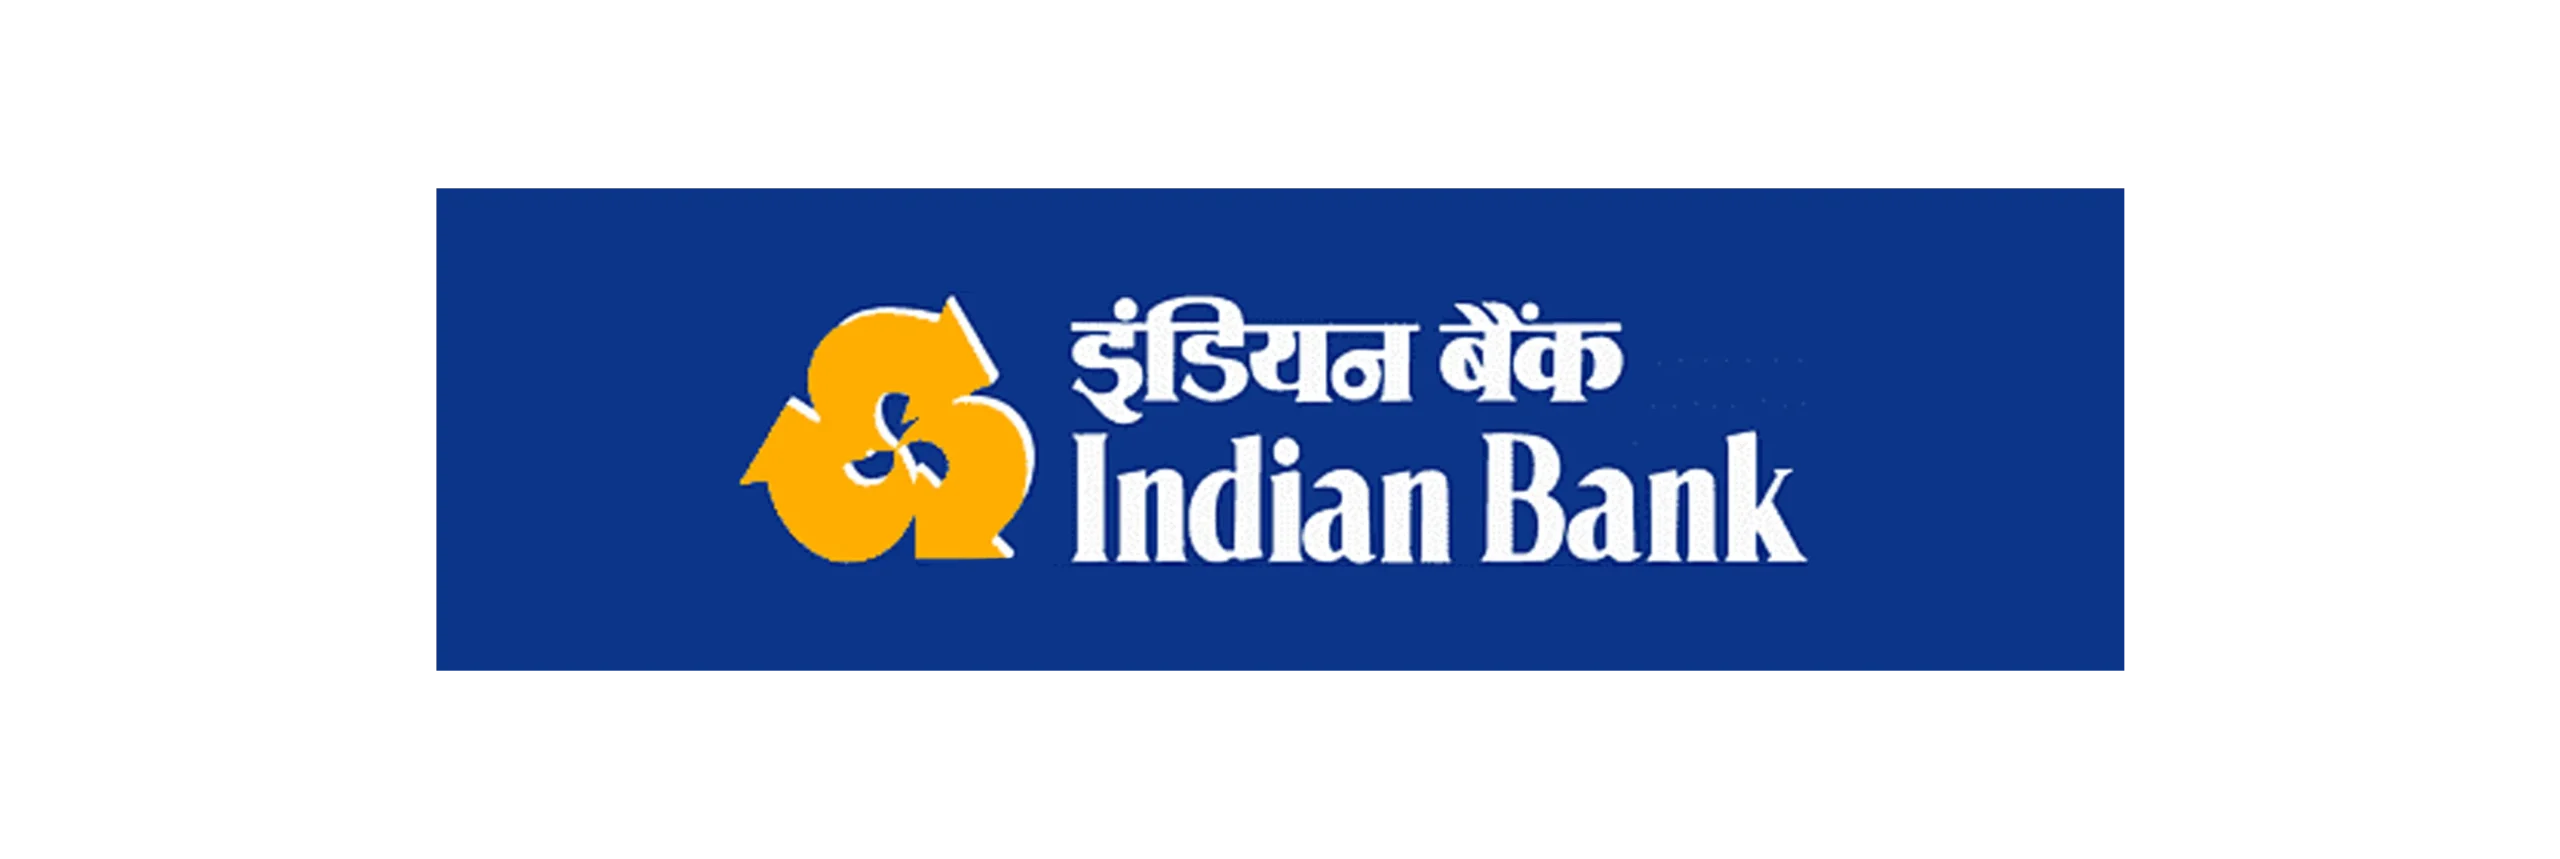 indianbank